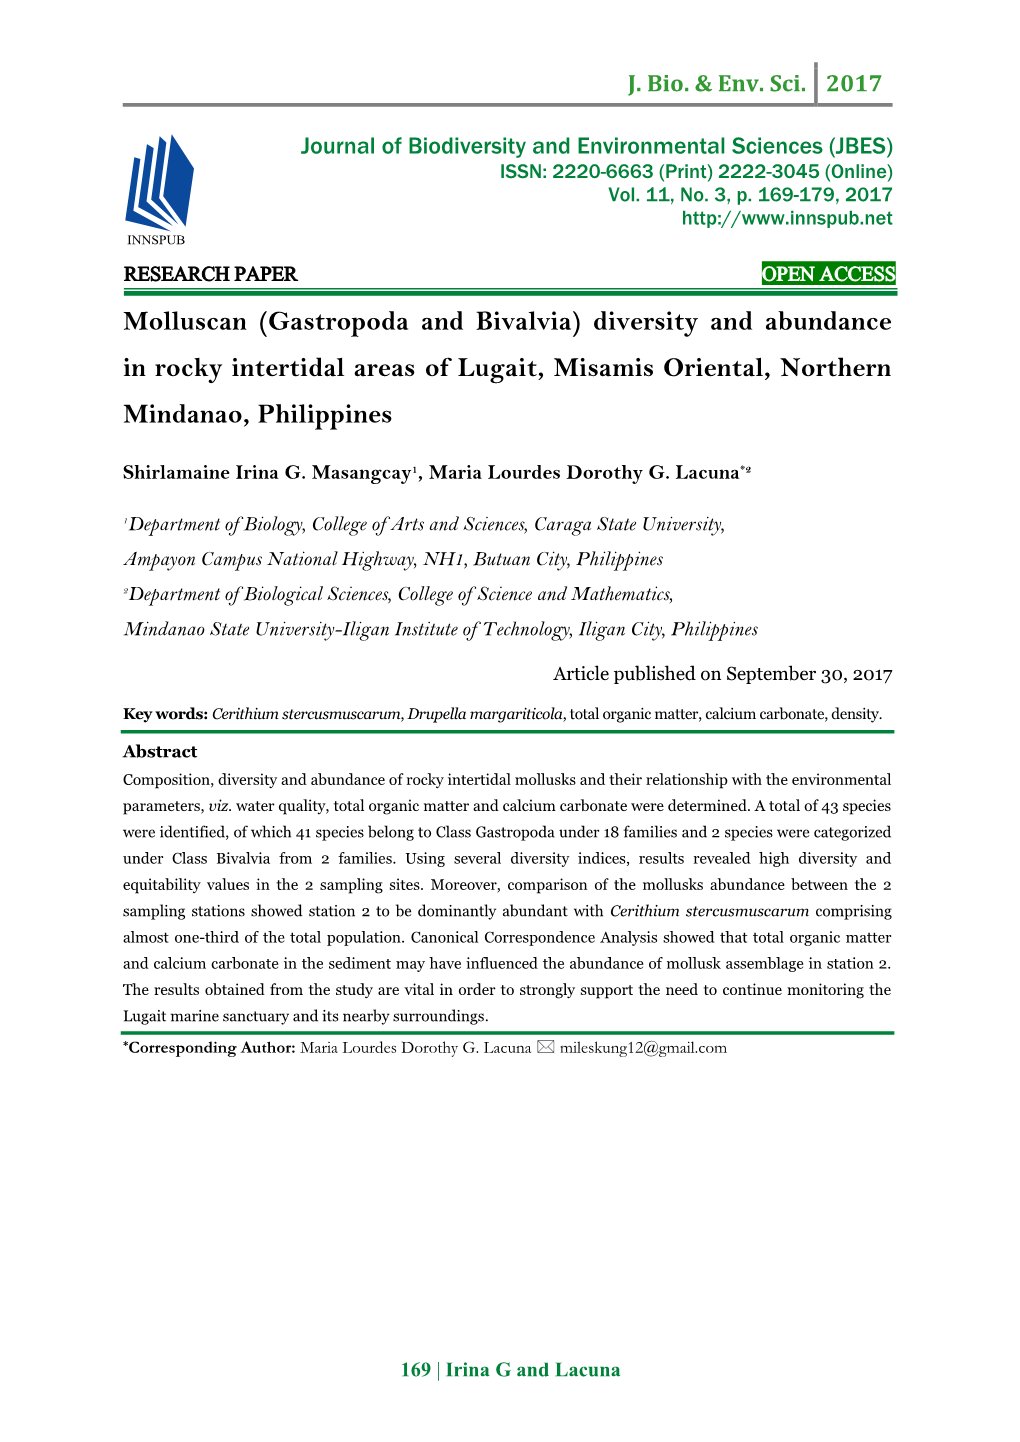 Molluscan (Gastropoda and Bivalvia) Diversity and Abundance in Rocky Intertidal Areas of Lugait, Misamis Oriental, Northern Mindanao, Philippines